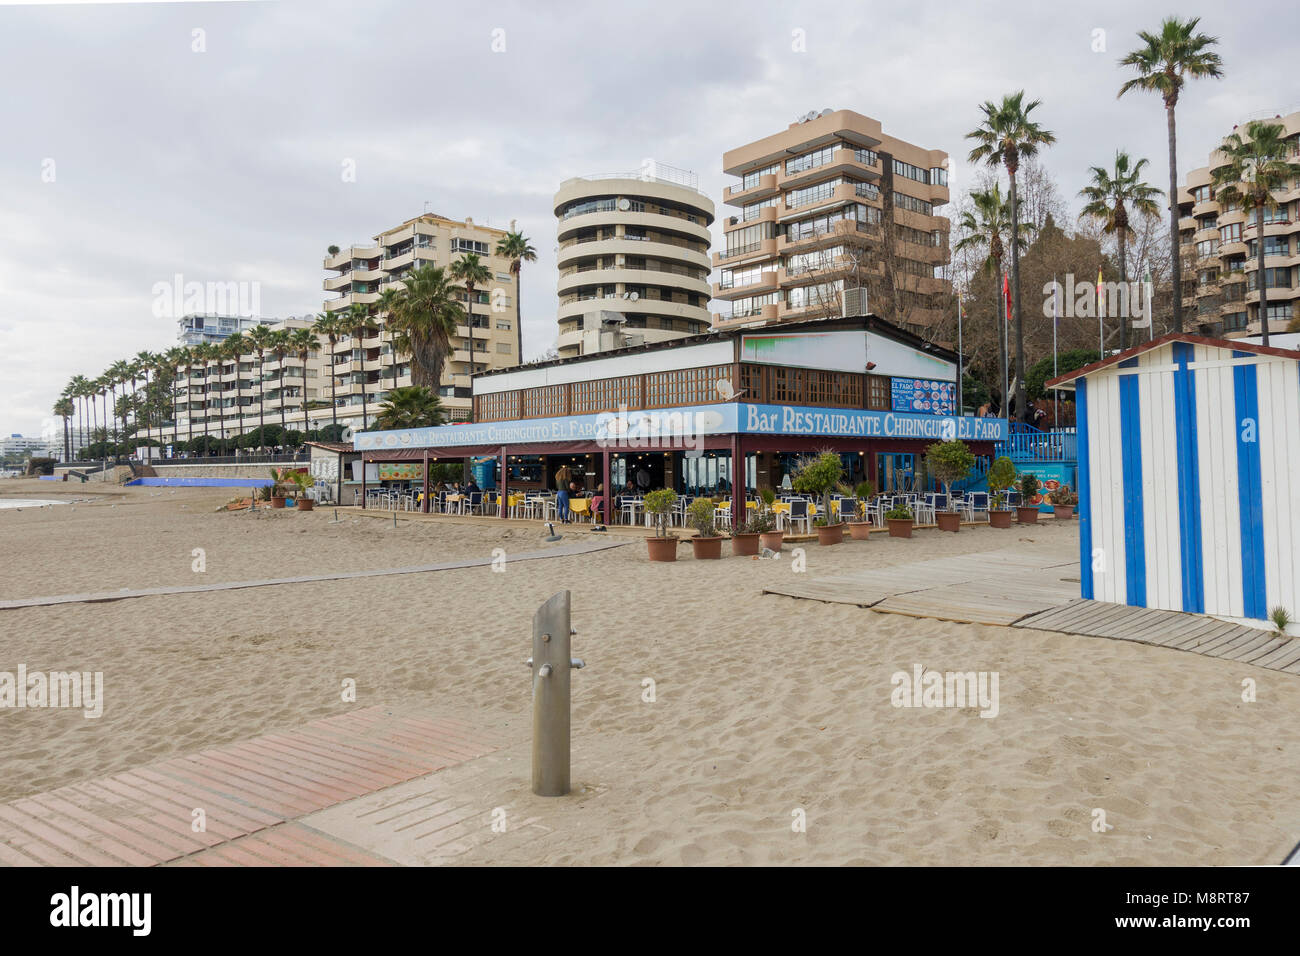 Beach Bar Restaurant Chiringuito, vorn Promenade, Marbella, Andalusien, Spanien. Stockfoto